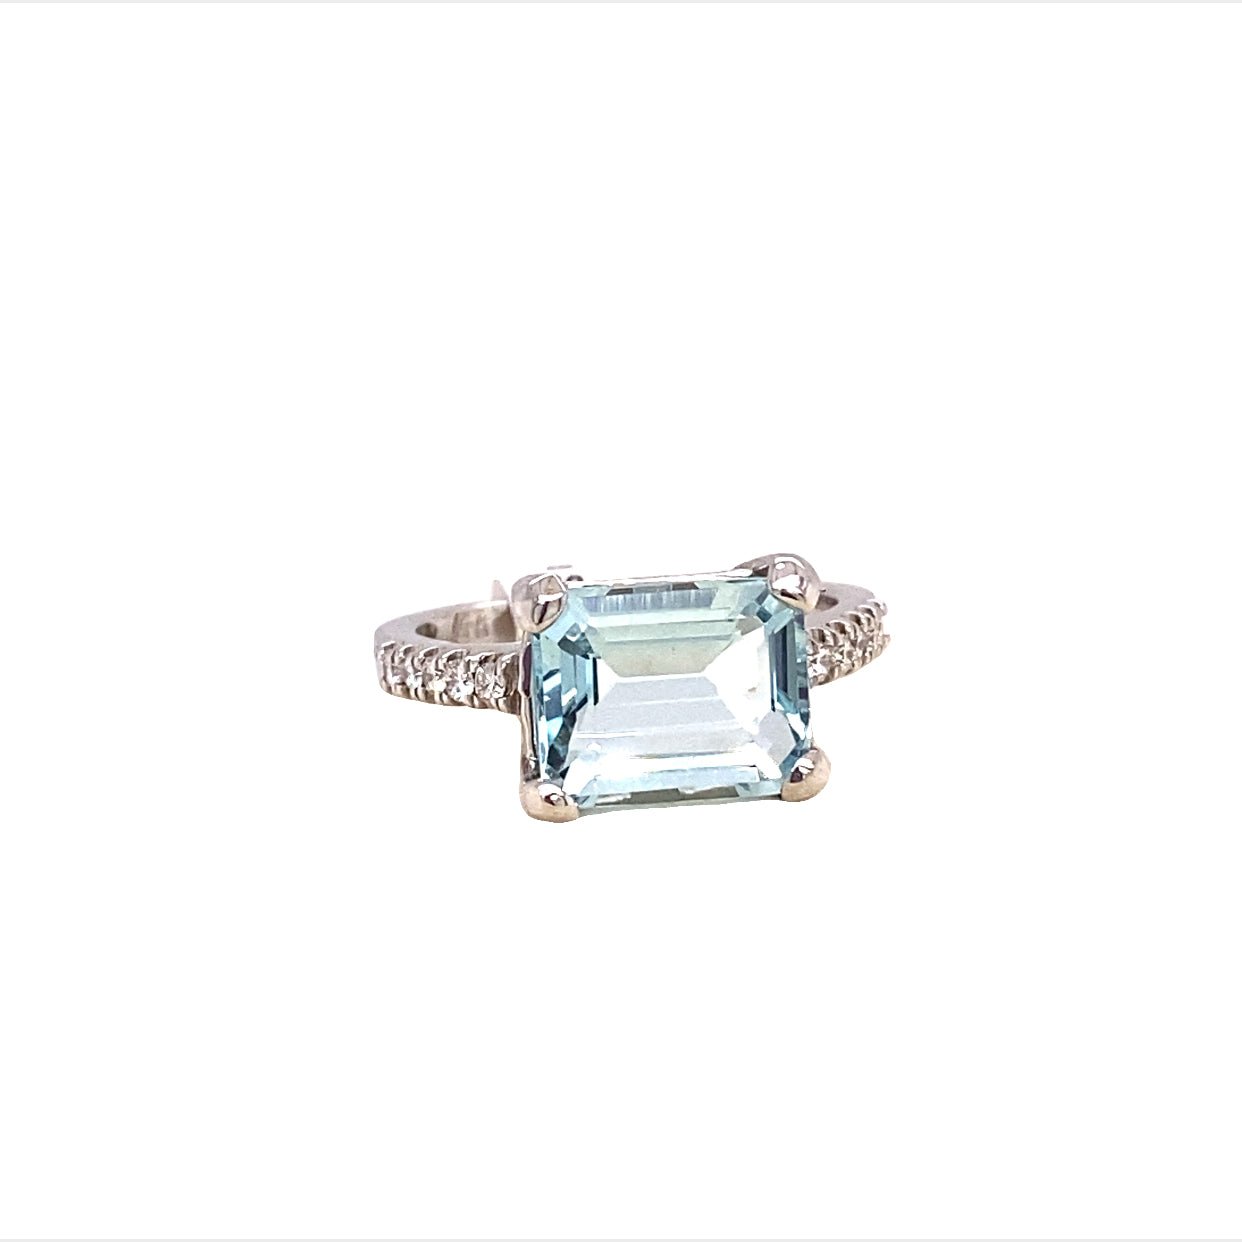 Ring- aquamarine emerald cut diamond shank - Gaines Jewelers